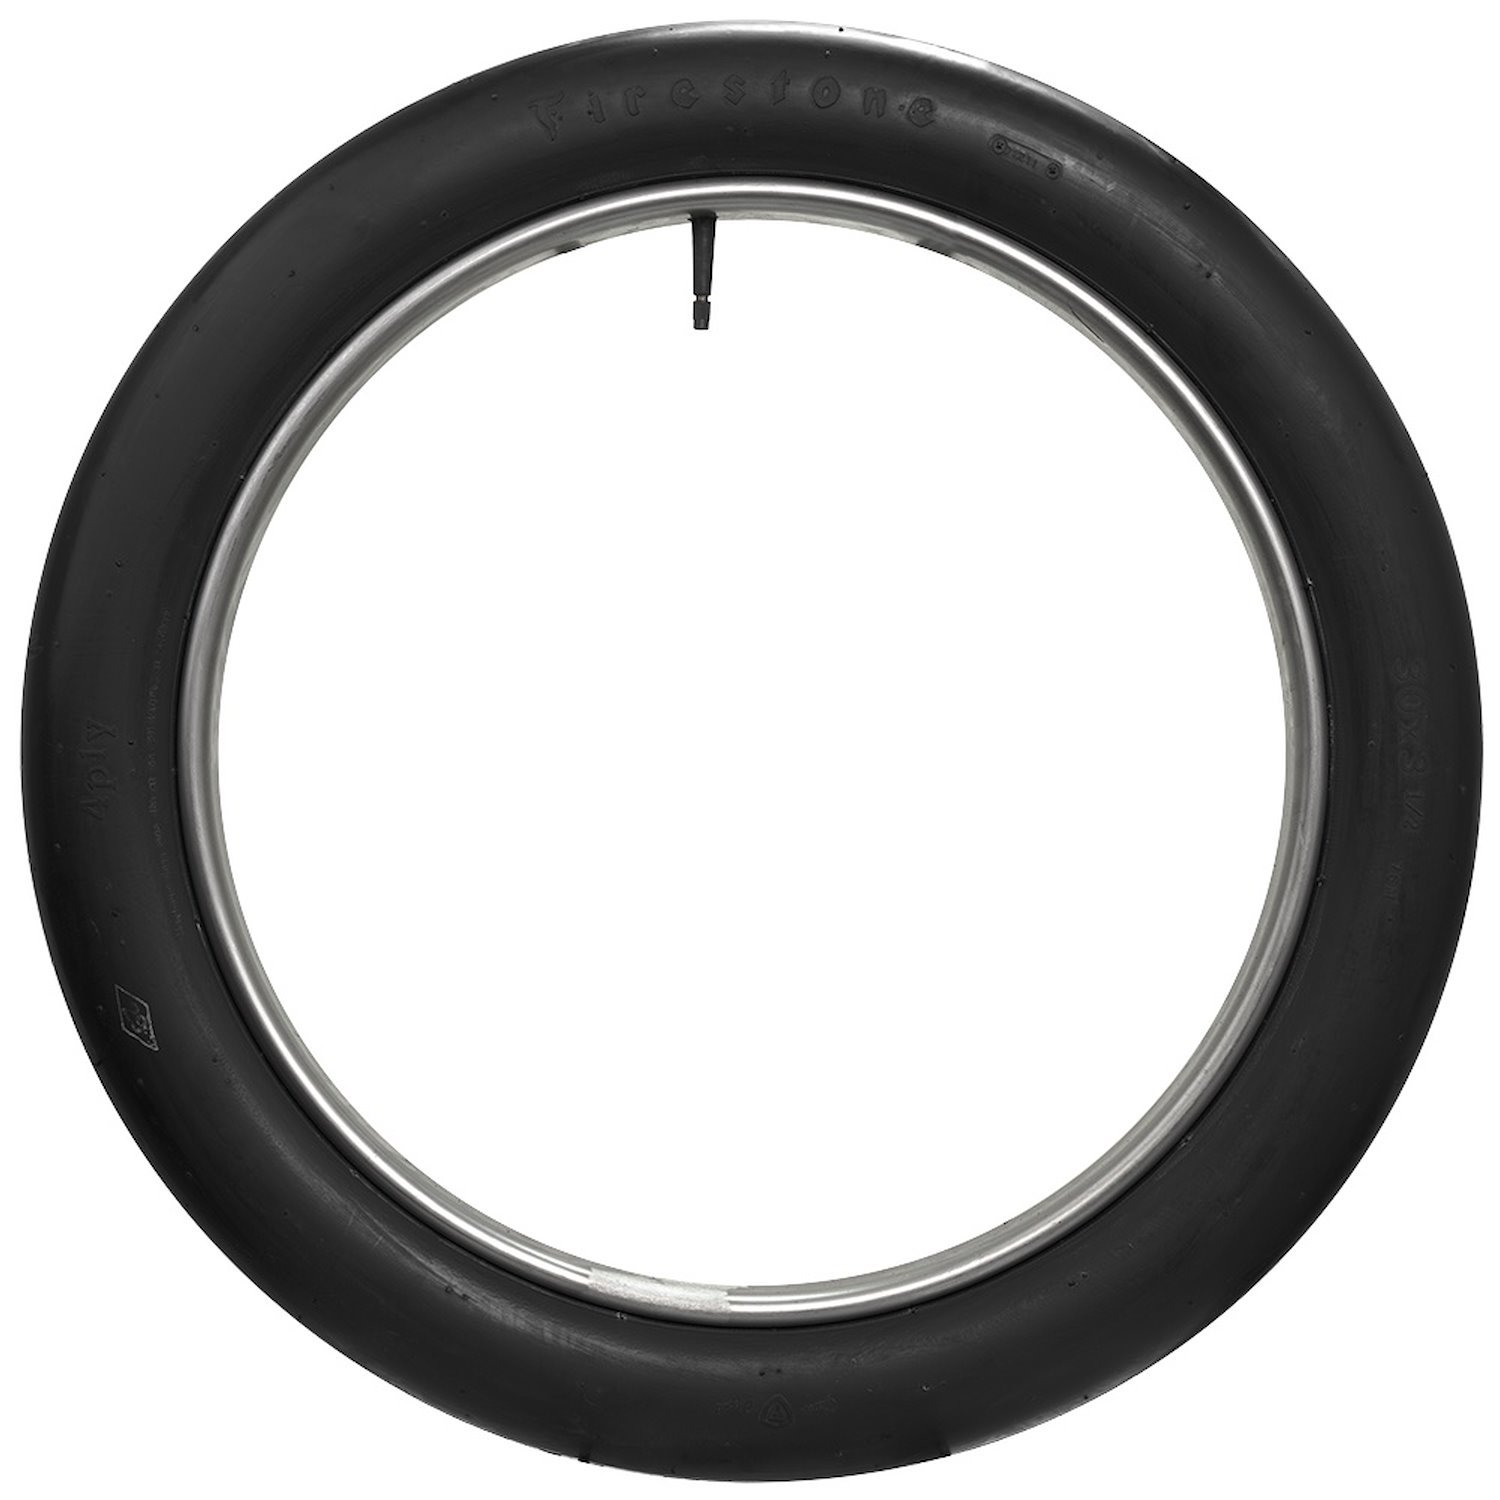 805850 Tire, Firestone Cl-Incher, Smooth, All Black, 30x3